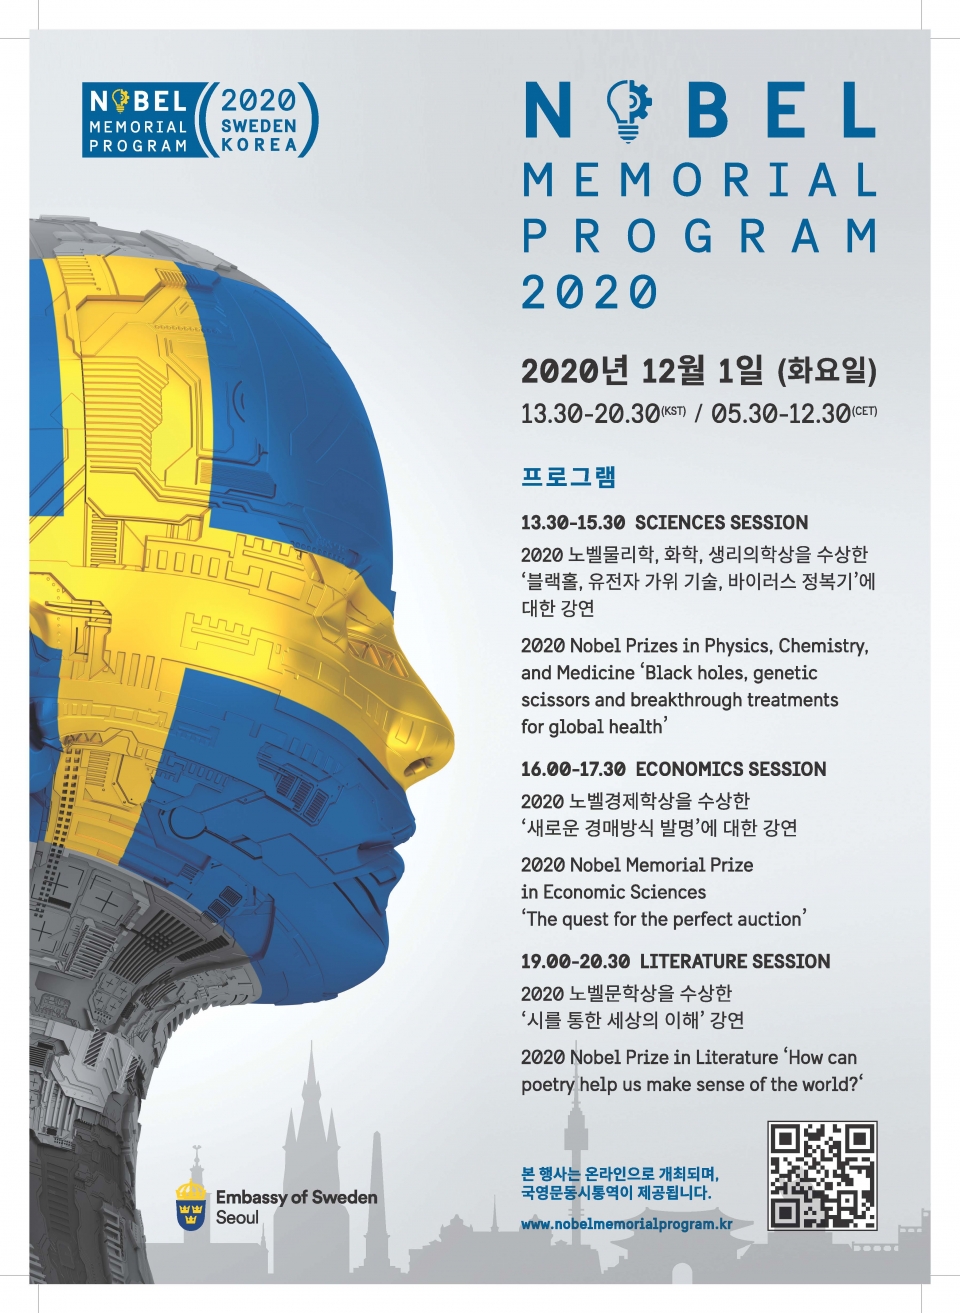 ‘Sweden-Korea Nobel Memorial Program 2020’ 포스터. (주한스웨덴대사관 제공)